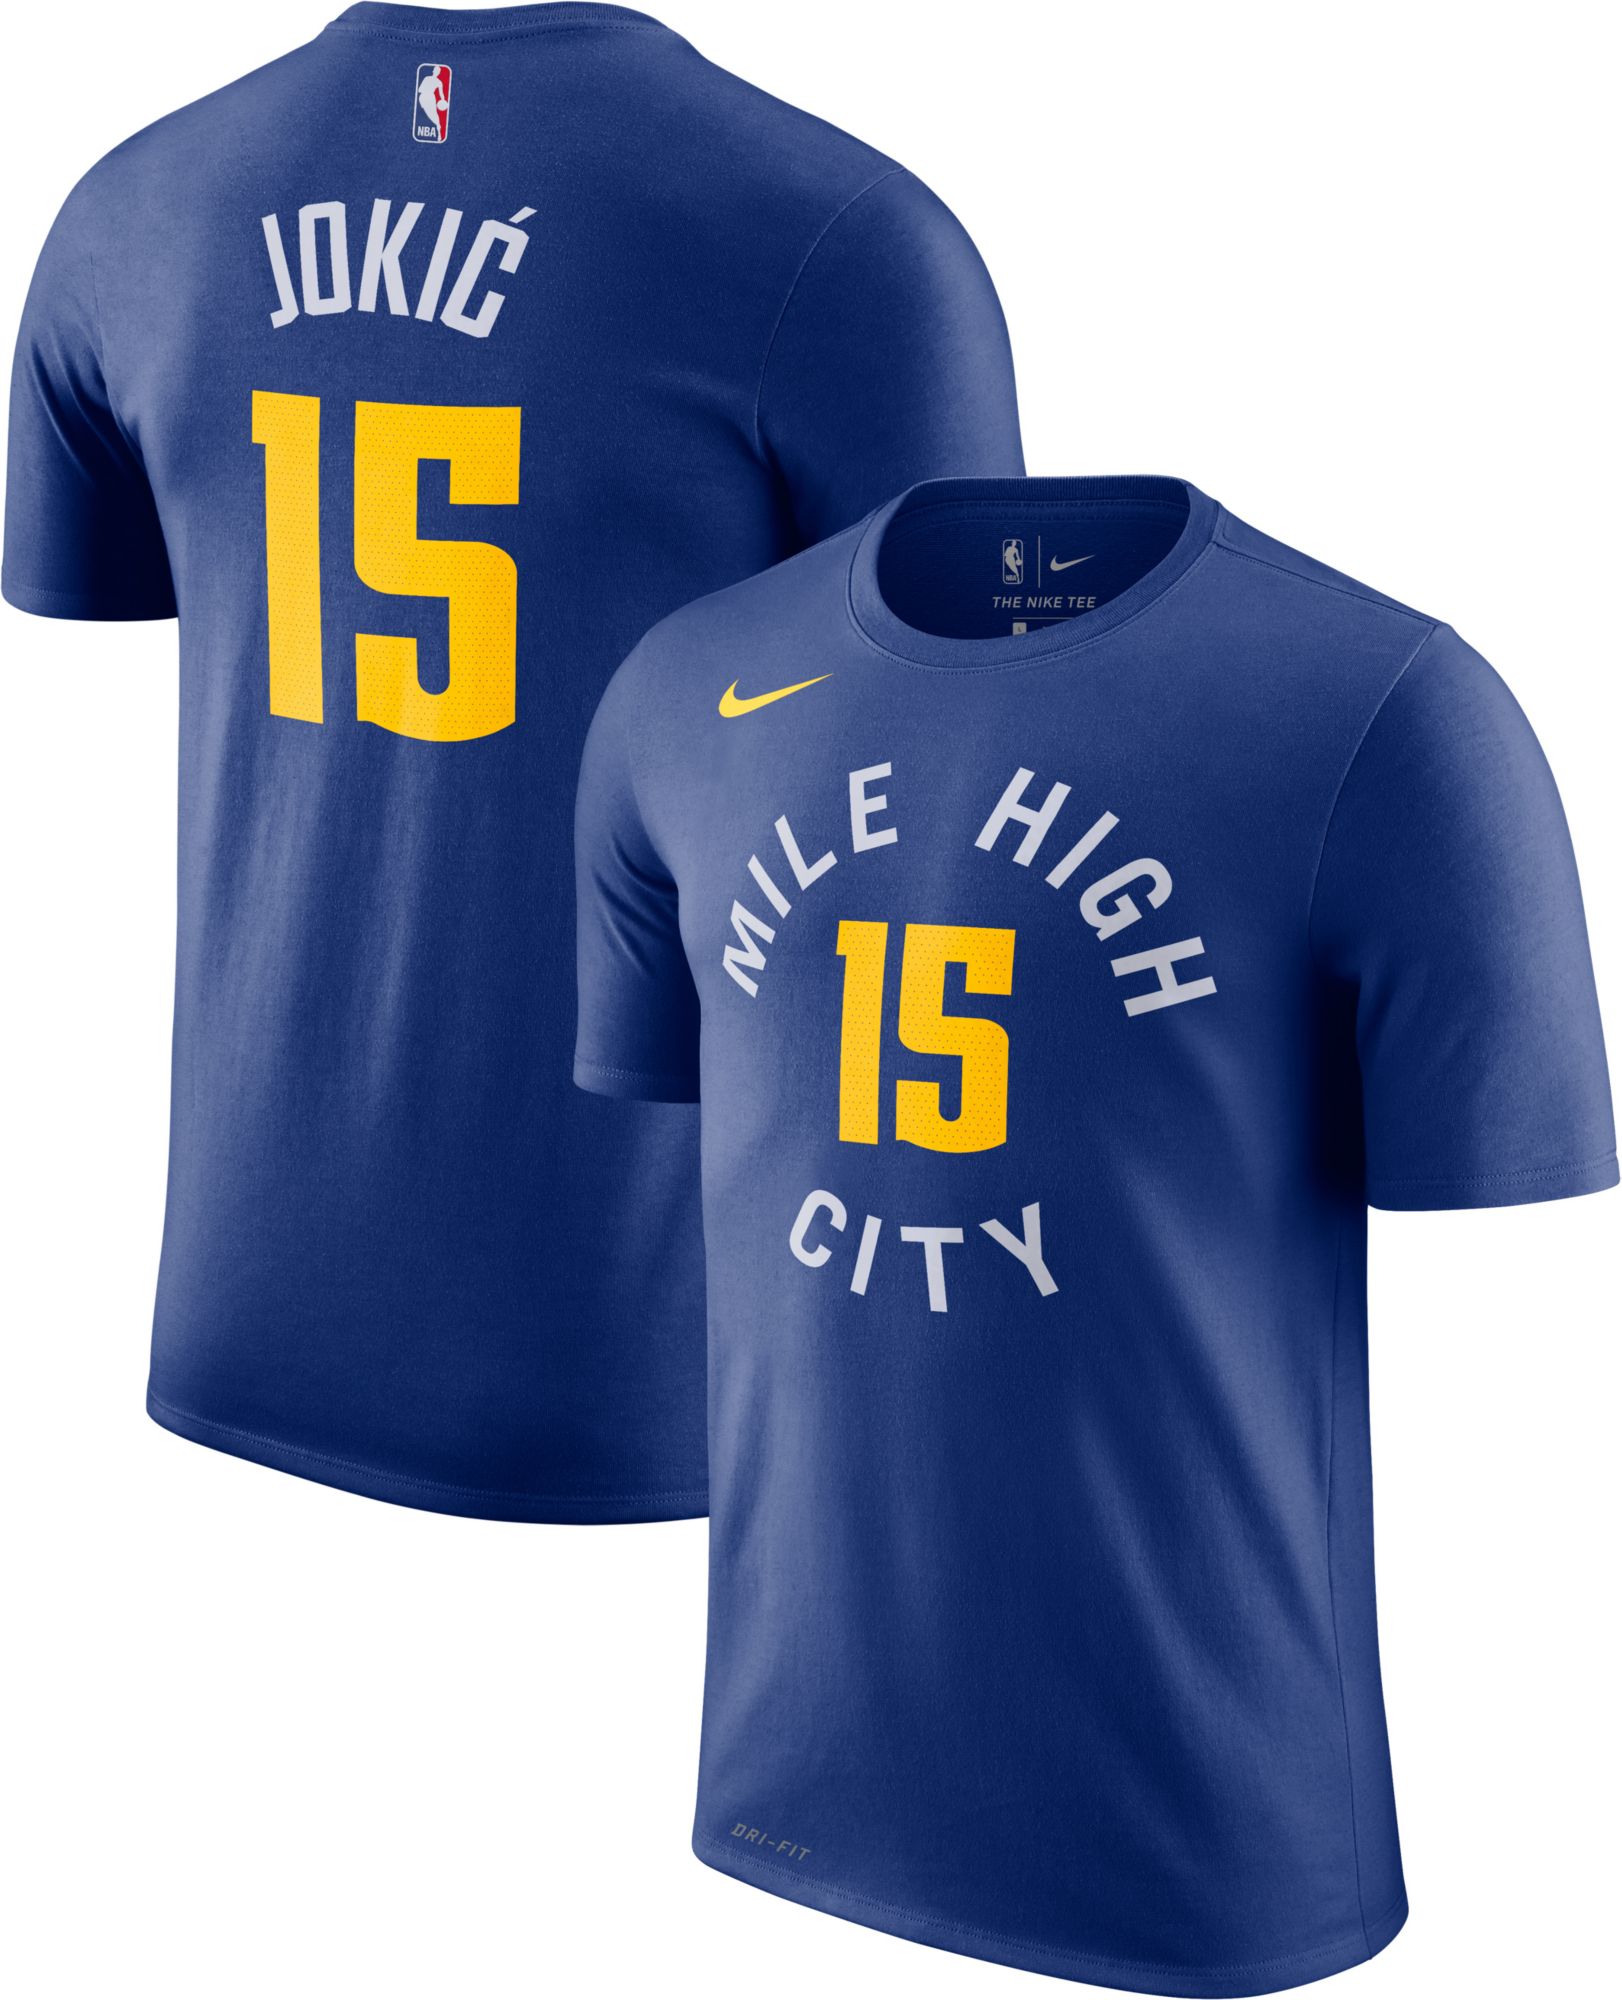 jokic mile high city jersey